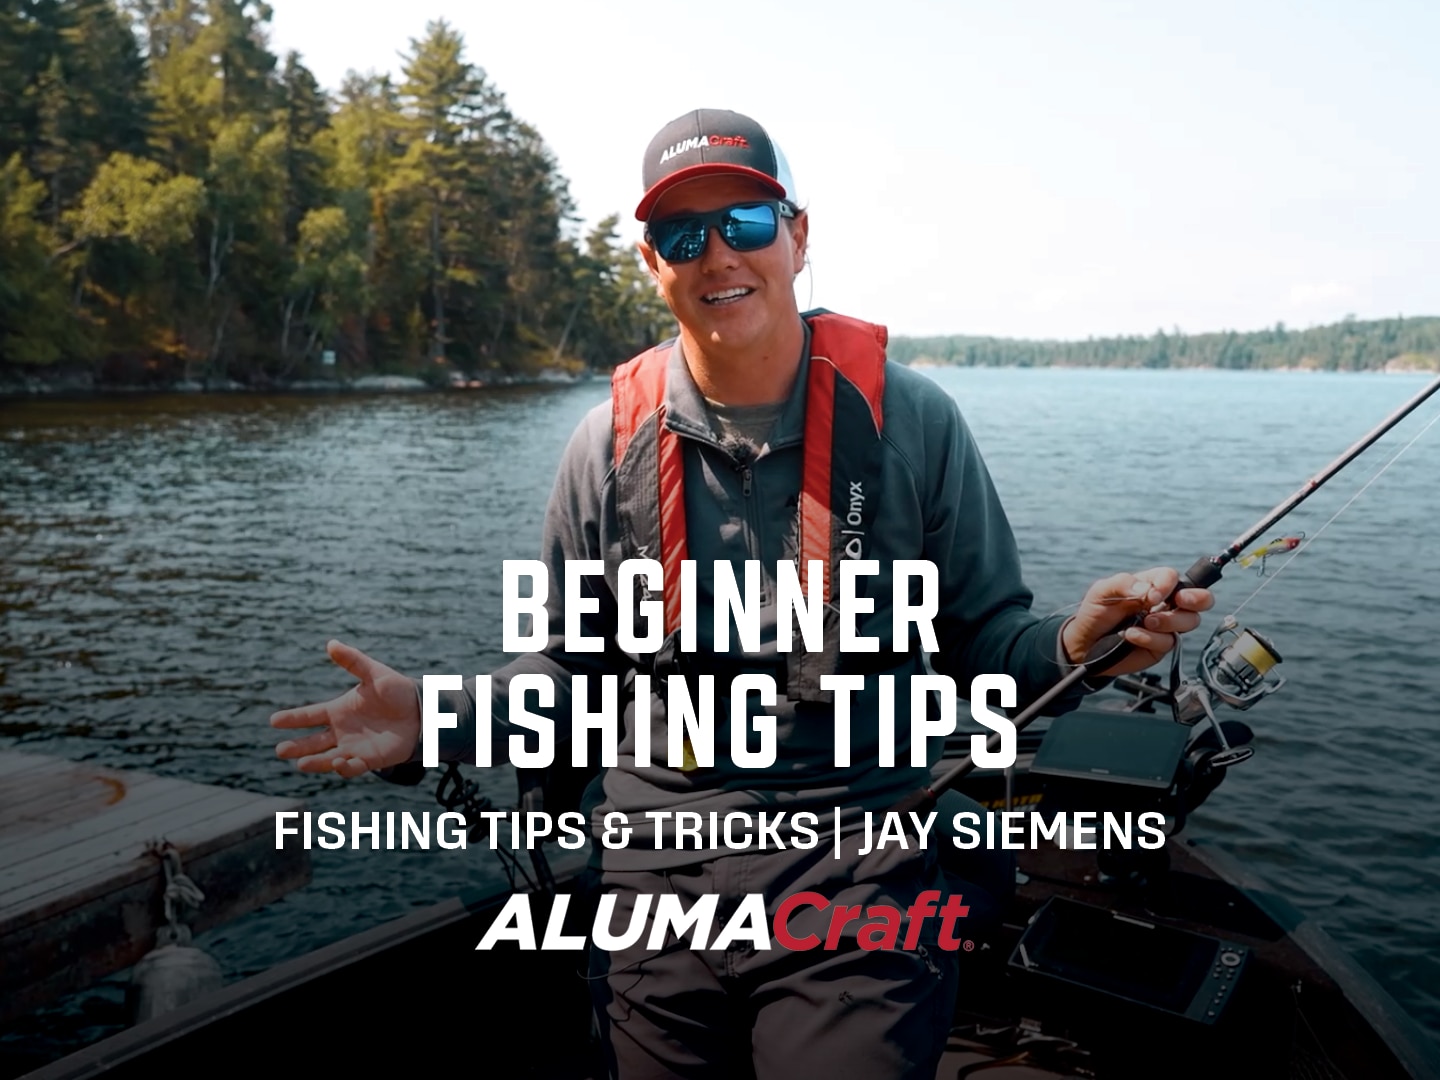 Jay Siemens, Fishing Tips for Beginners